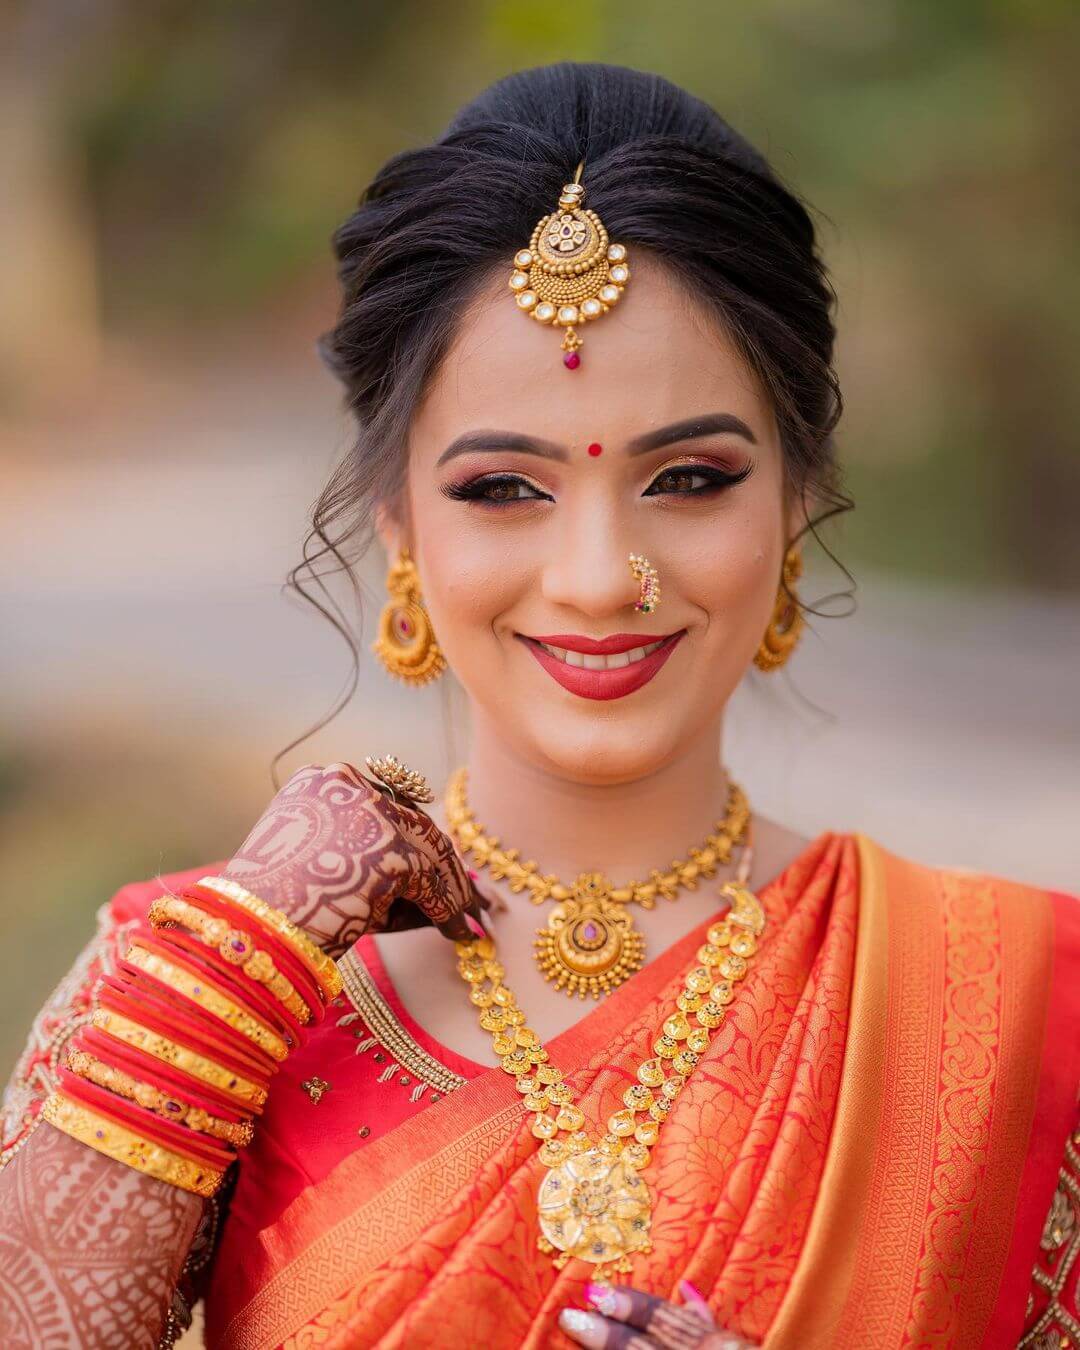 Minimal bridal makeup idea with a small red bindi